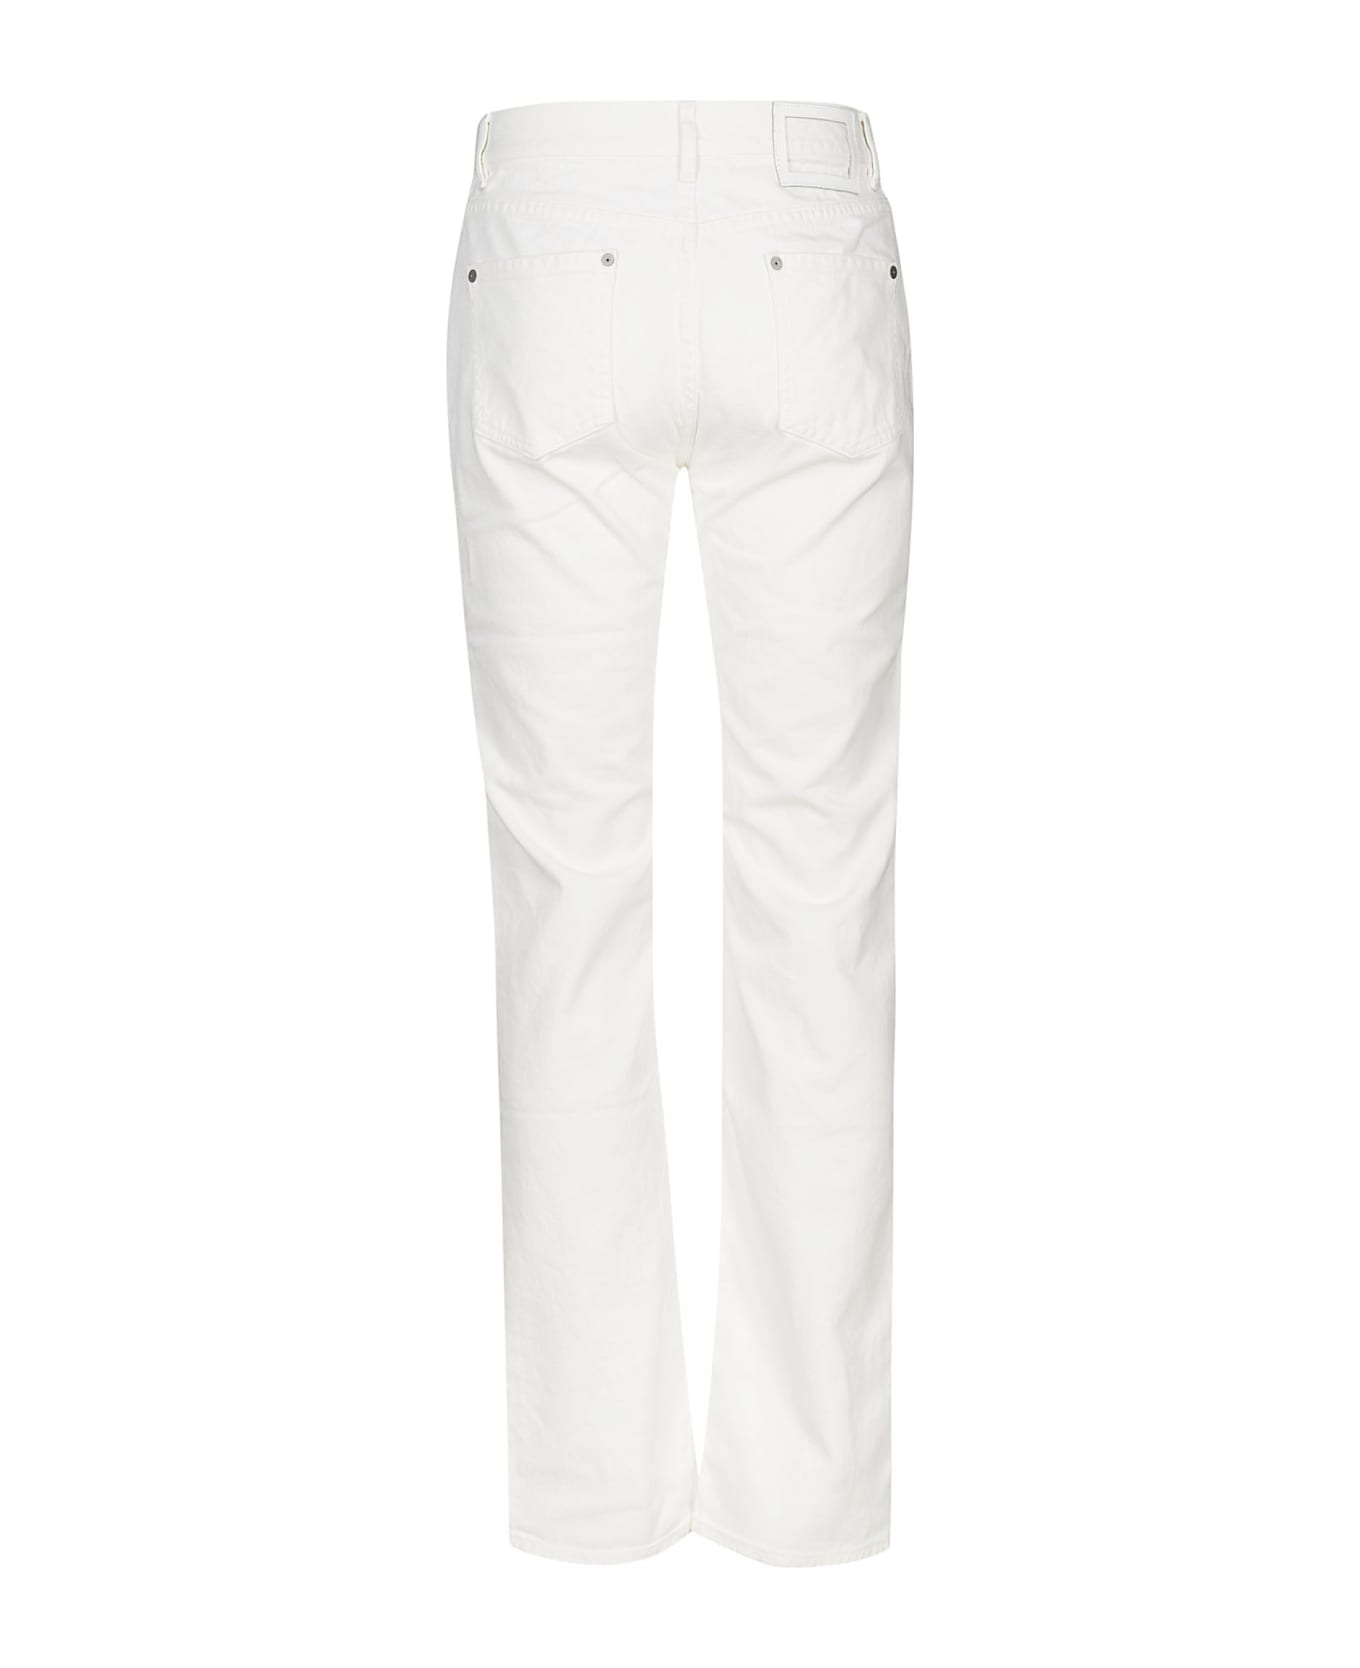 Maison Margiela Waist Fit Jeans - White ボトムス